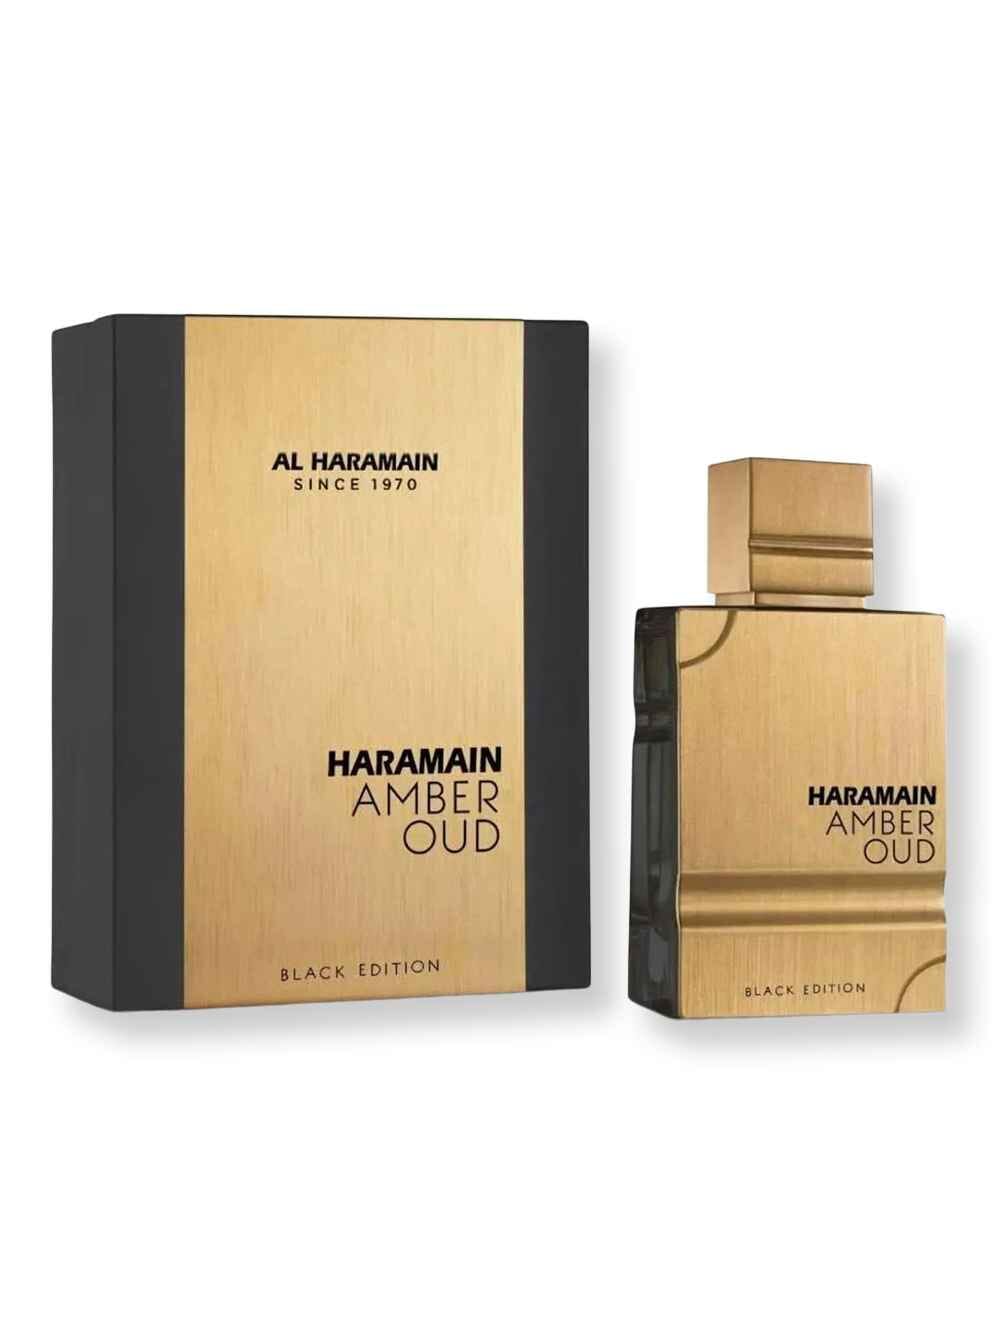 Al Haramain Al Haramain Amber Oud Black Edition EDP Spray Tester 3.4 oz100 ml Perfume 